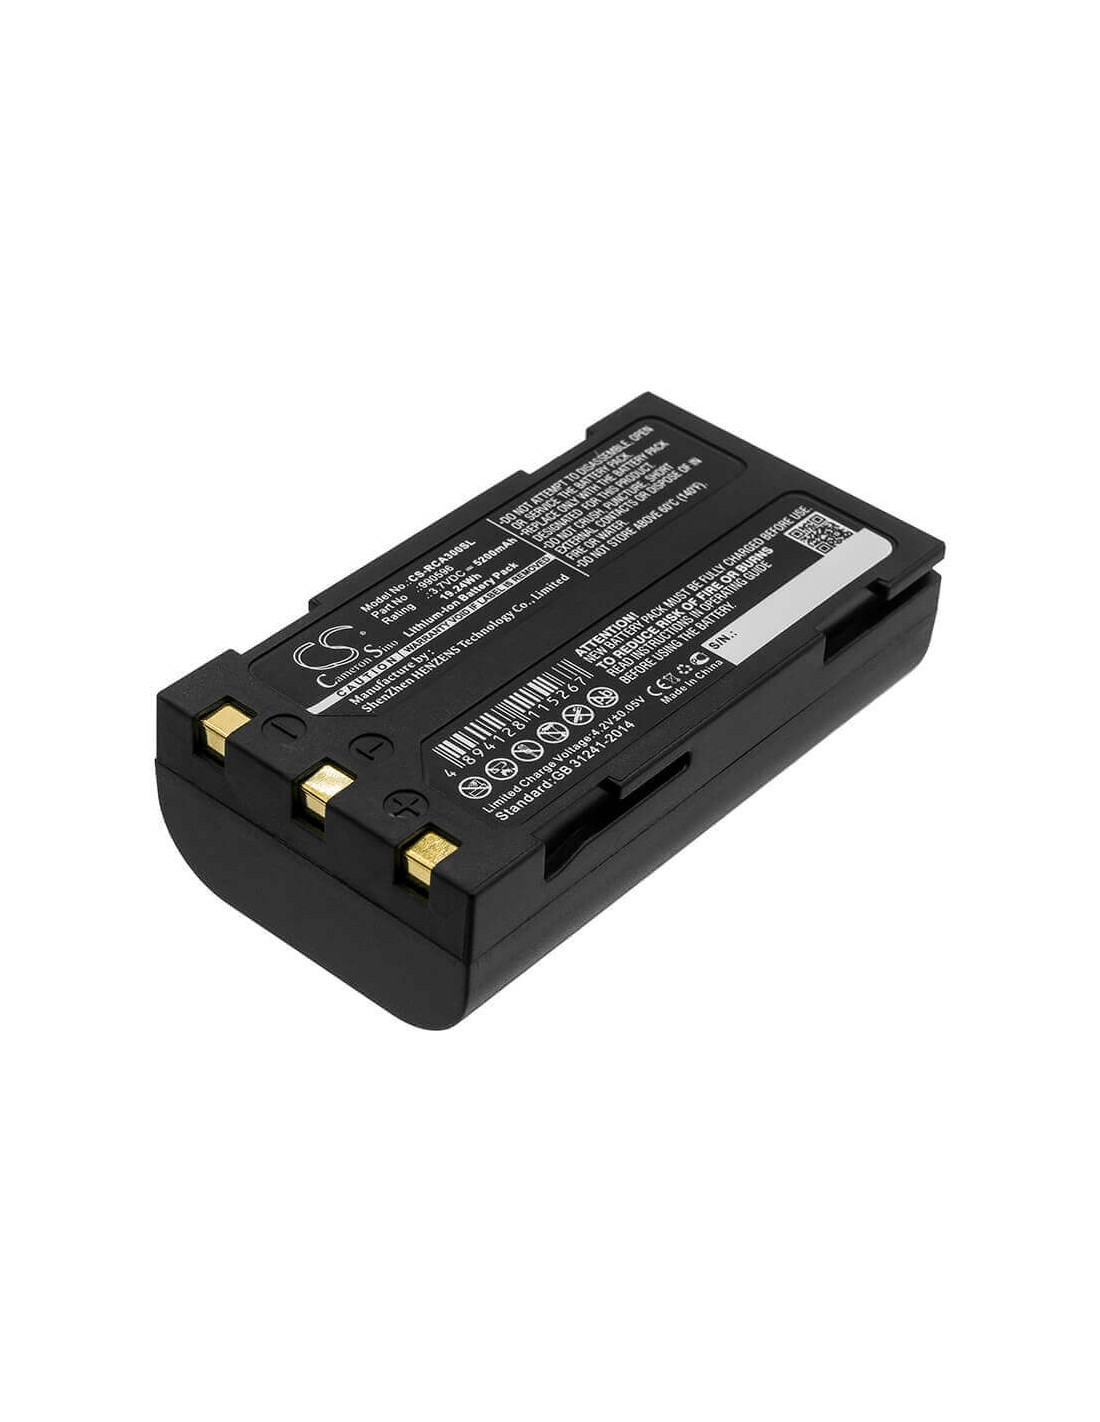 Battery for Ridgid Micro Ca-300 Inspection Camera, 40798, 37888 3.7V, 5200mAh - 19.24Wh